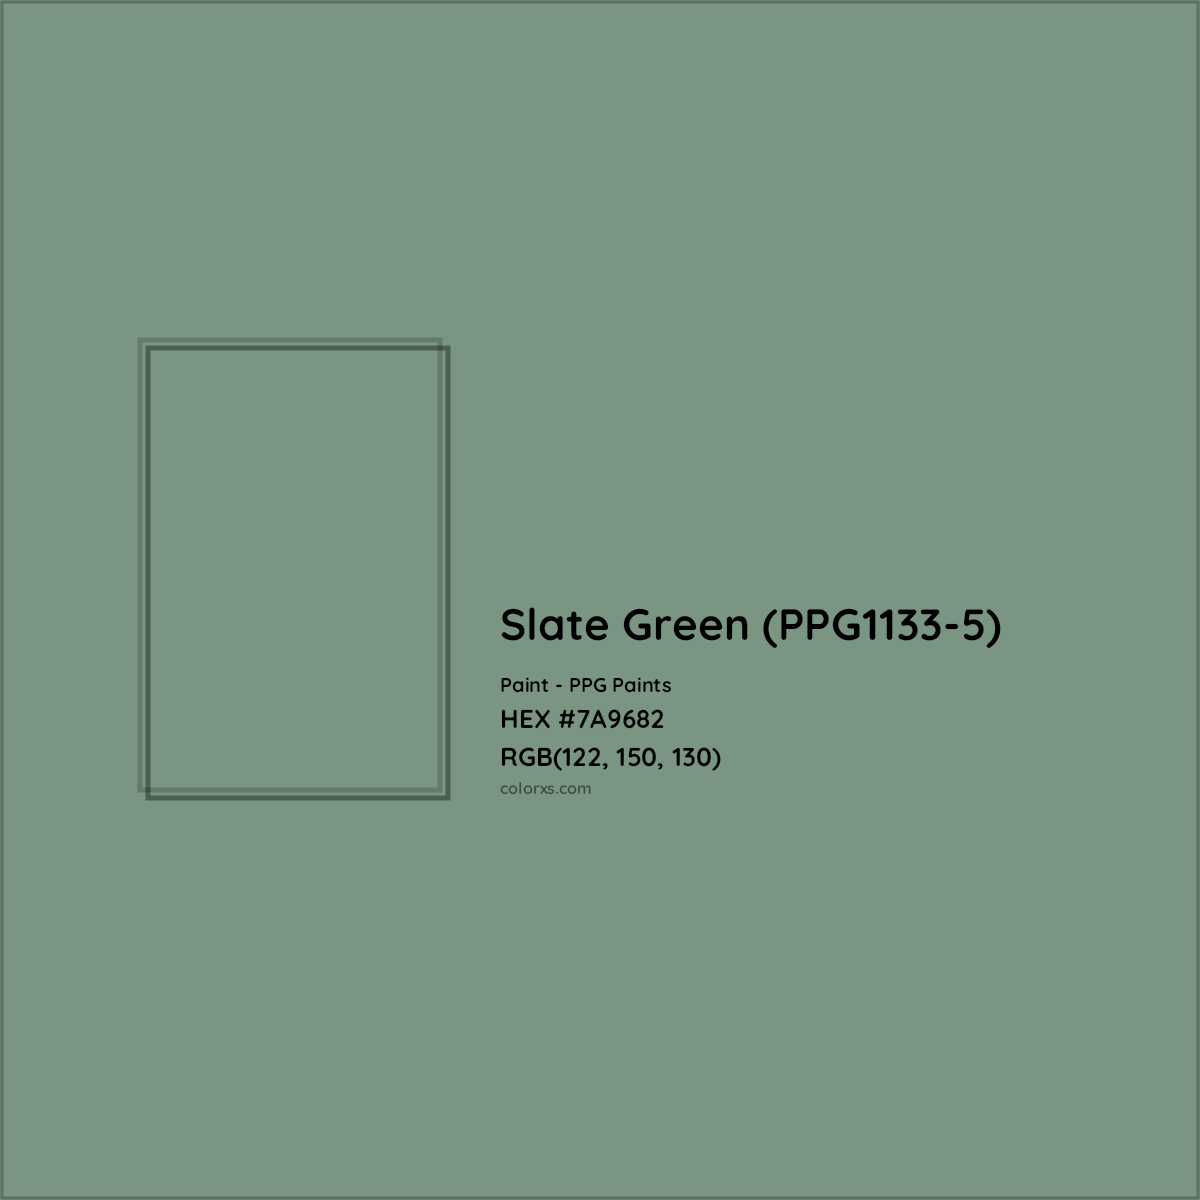 HEX #7A9682 Slate Green (PPG1133-5) Paint PPG Paints - Color Code